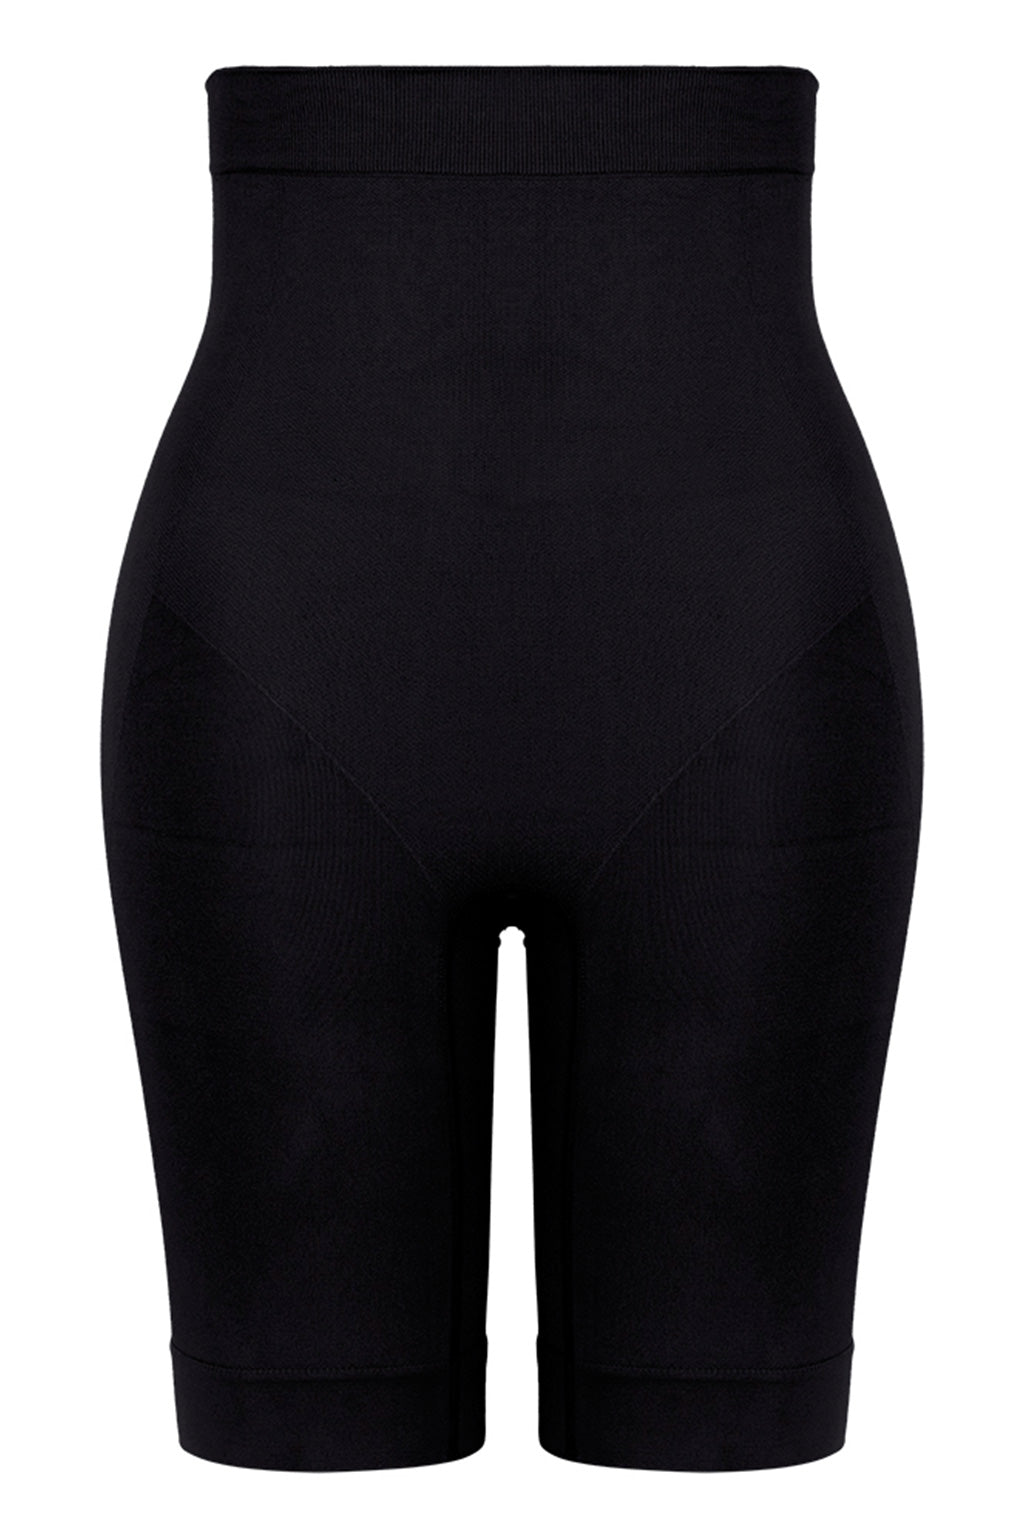 Satın alın Flarixa Thin Material Girdle Shorts High Waist Slimming